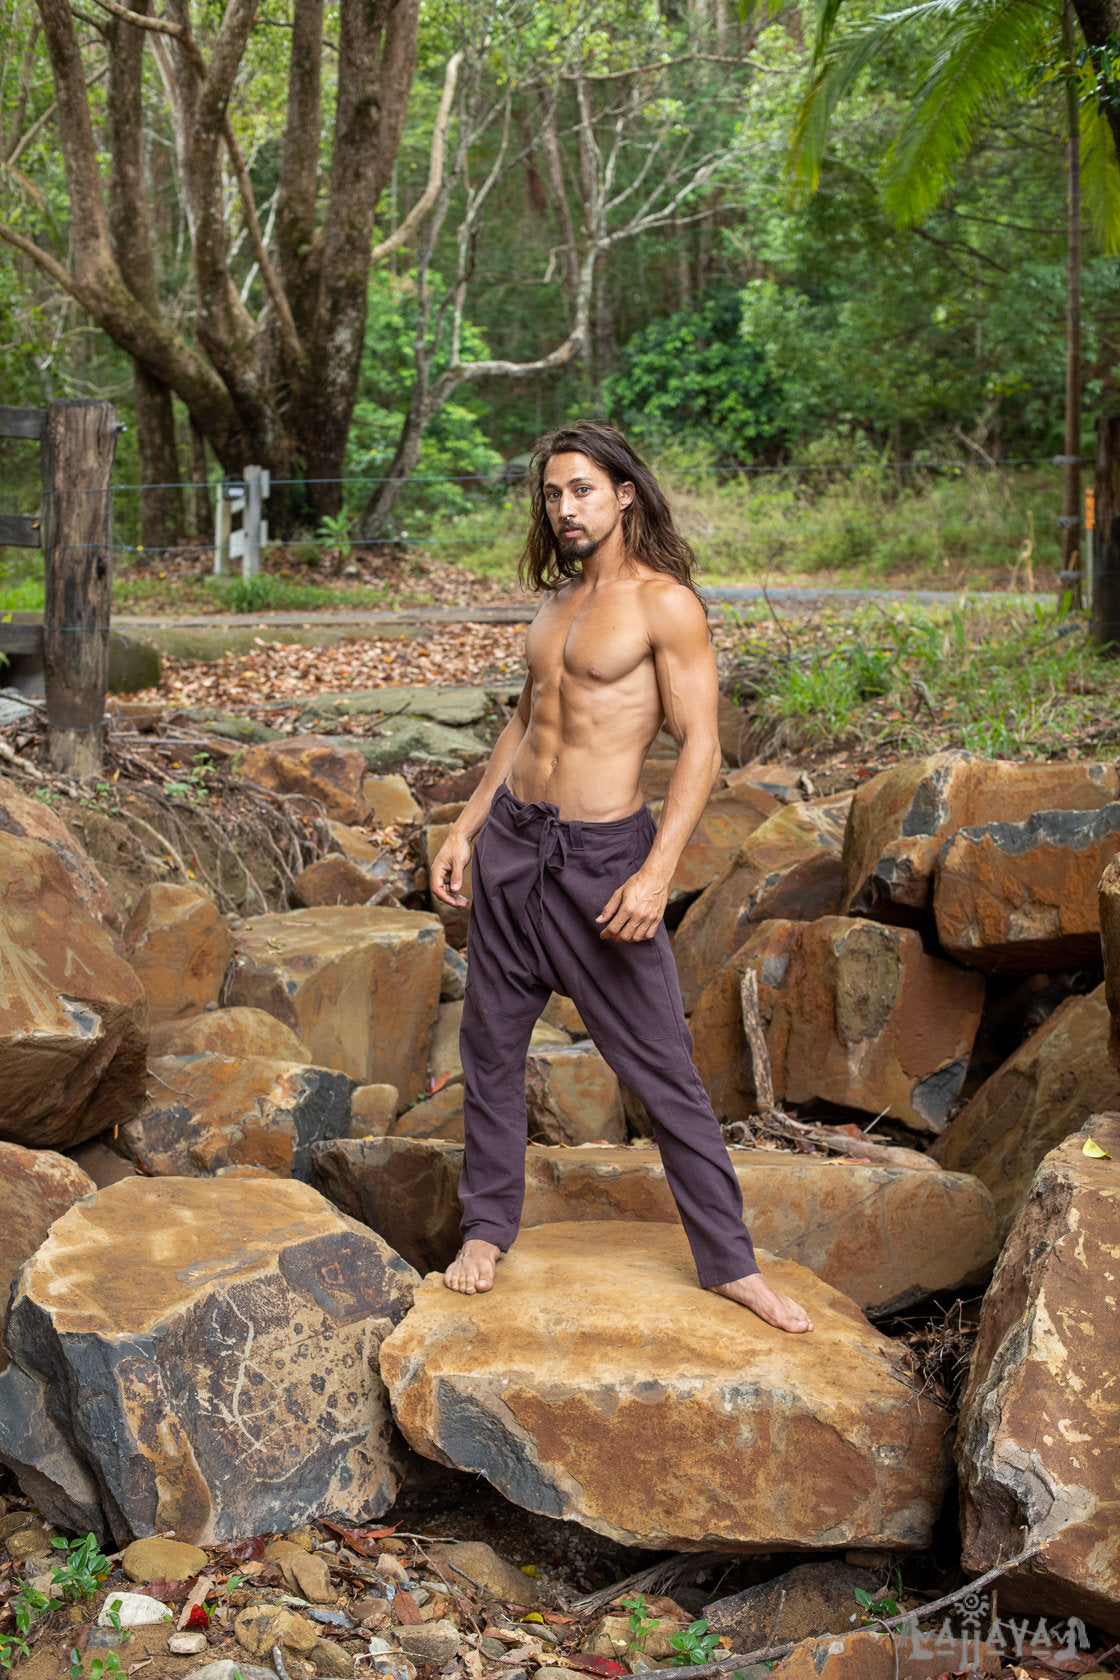 Sarouel en coton pour hommes marron entrejambe Alibaba Yoga confortable respirant taille unique coupe ample Festival pantalon Boho Hippie naturel terreux AJJAYA